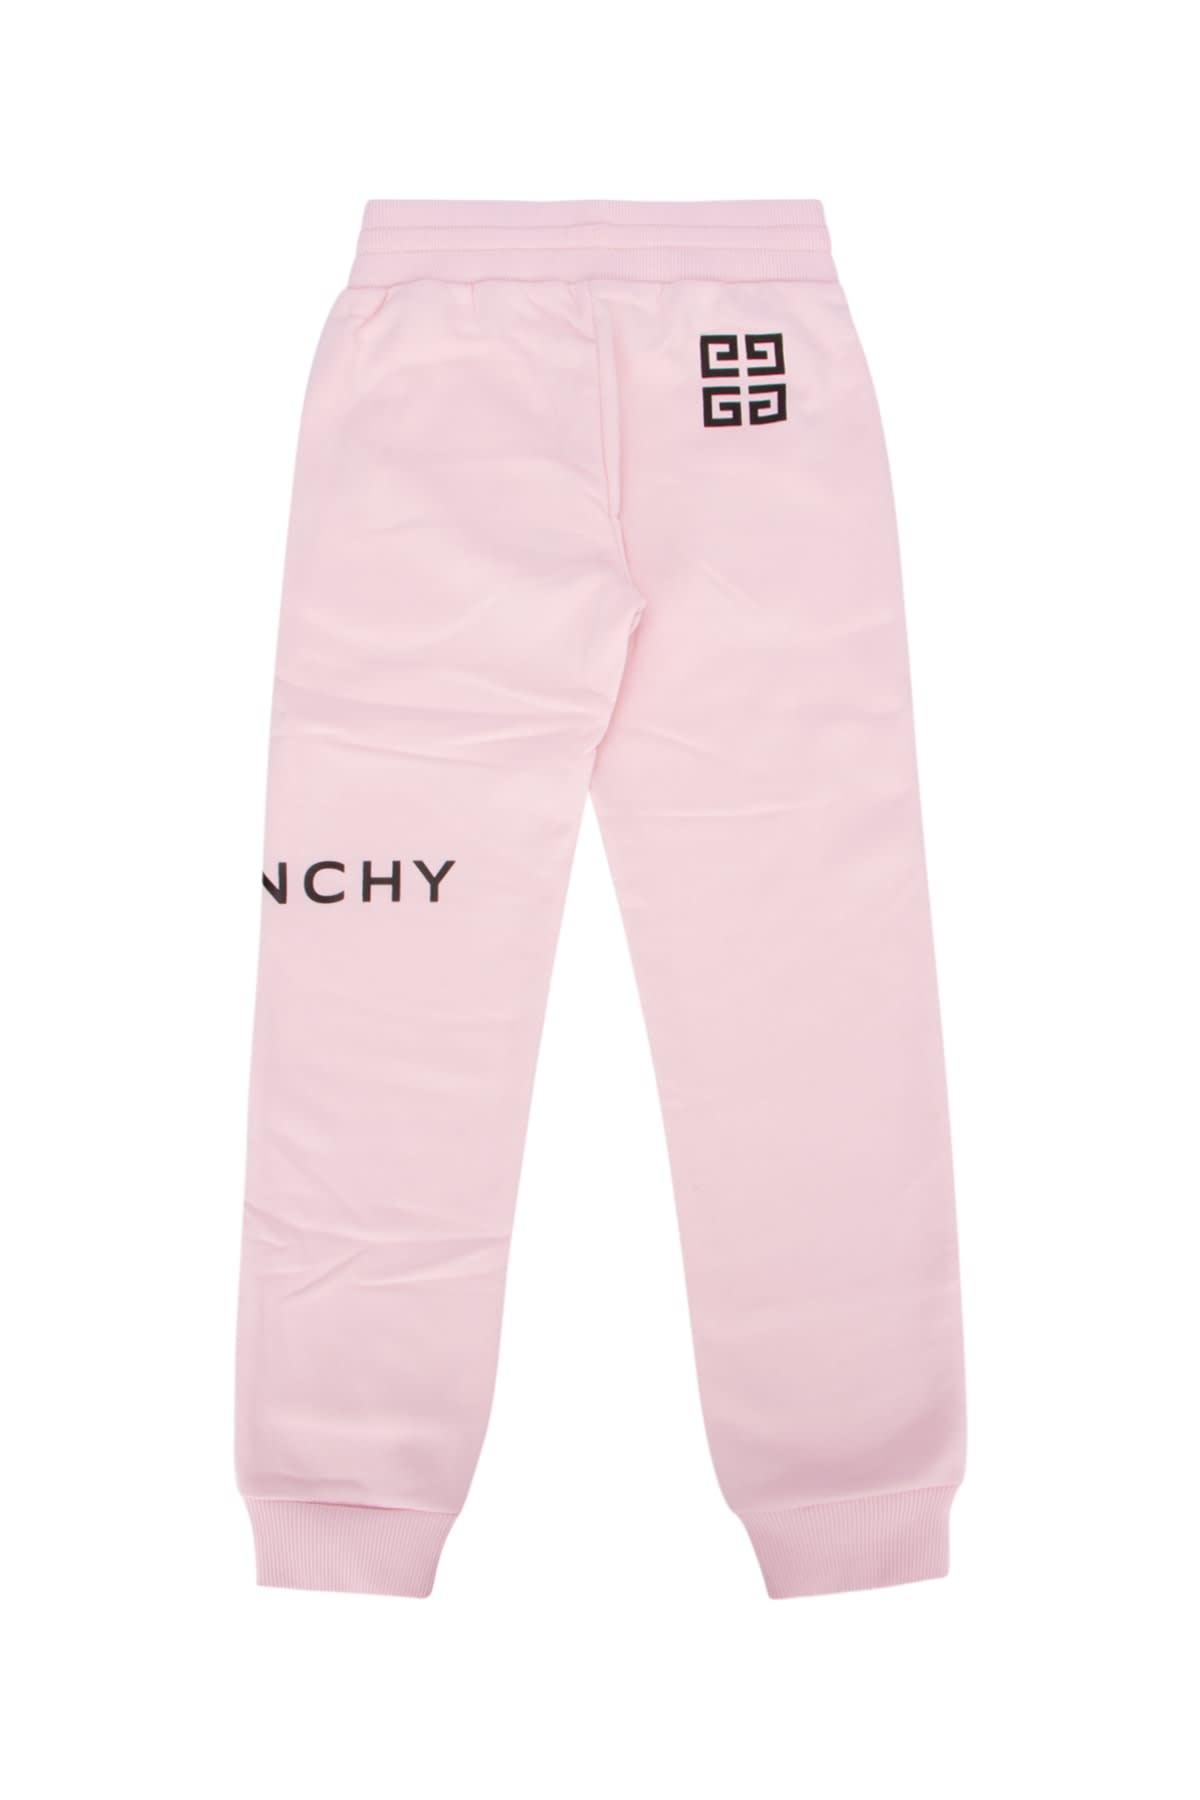 Givenchy Kids' Pantalone In Marshmallow